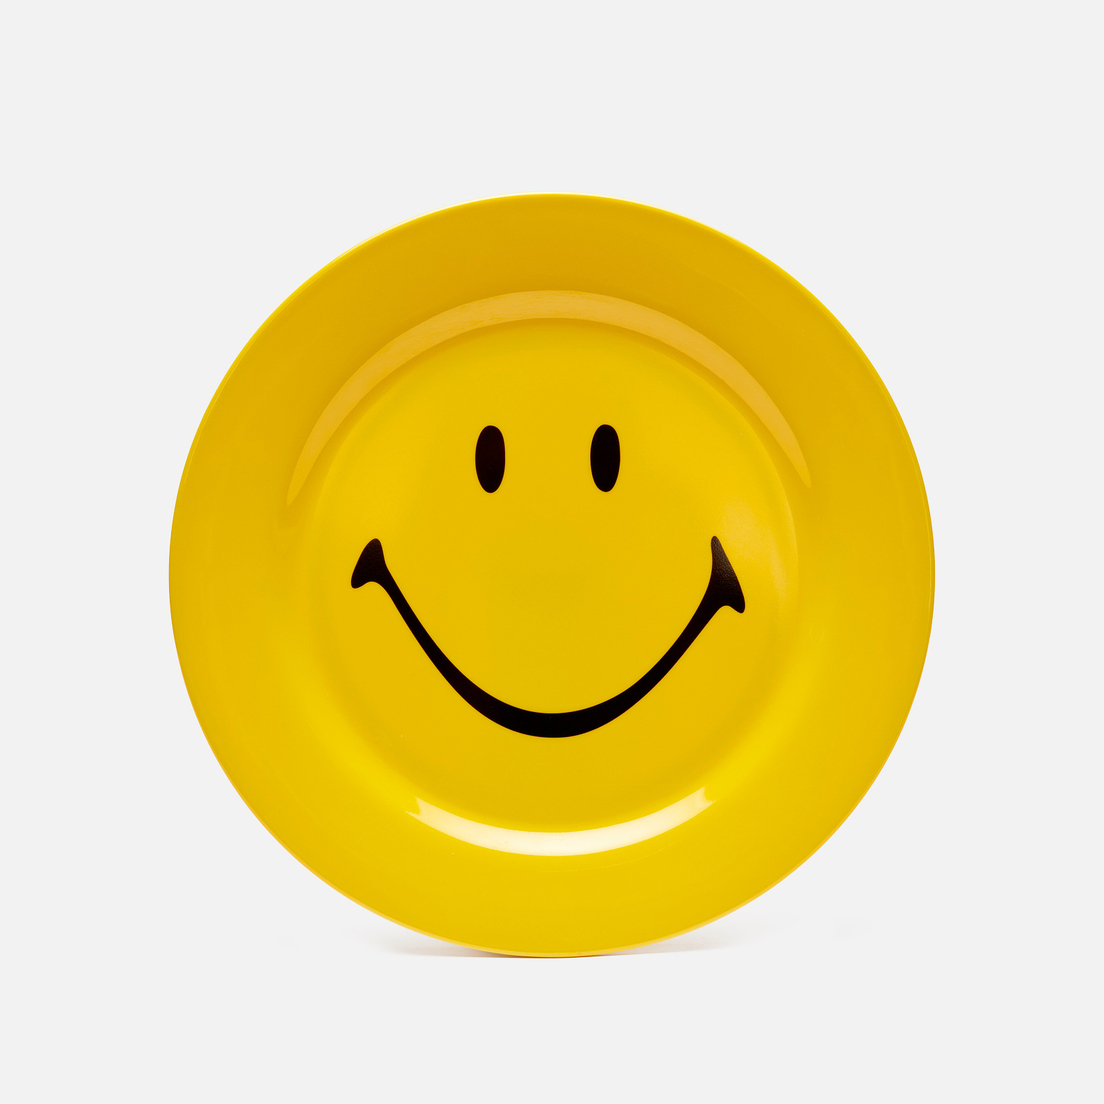 MARKET Комплект тарелок Smiley 4-Pack